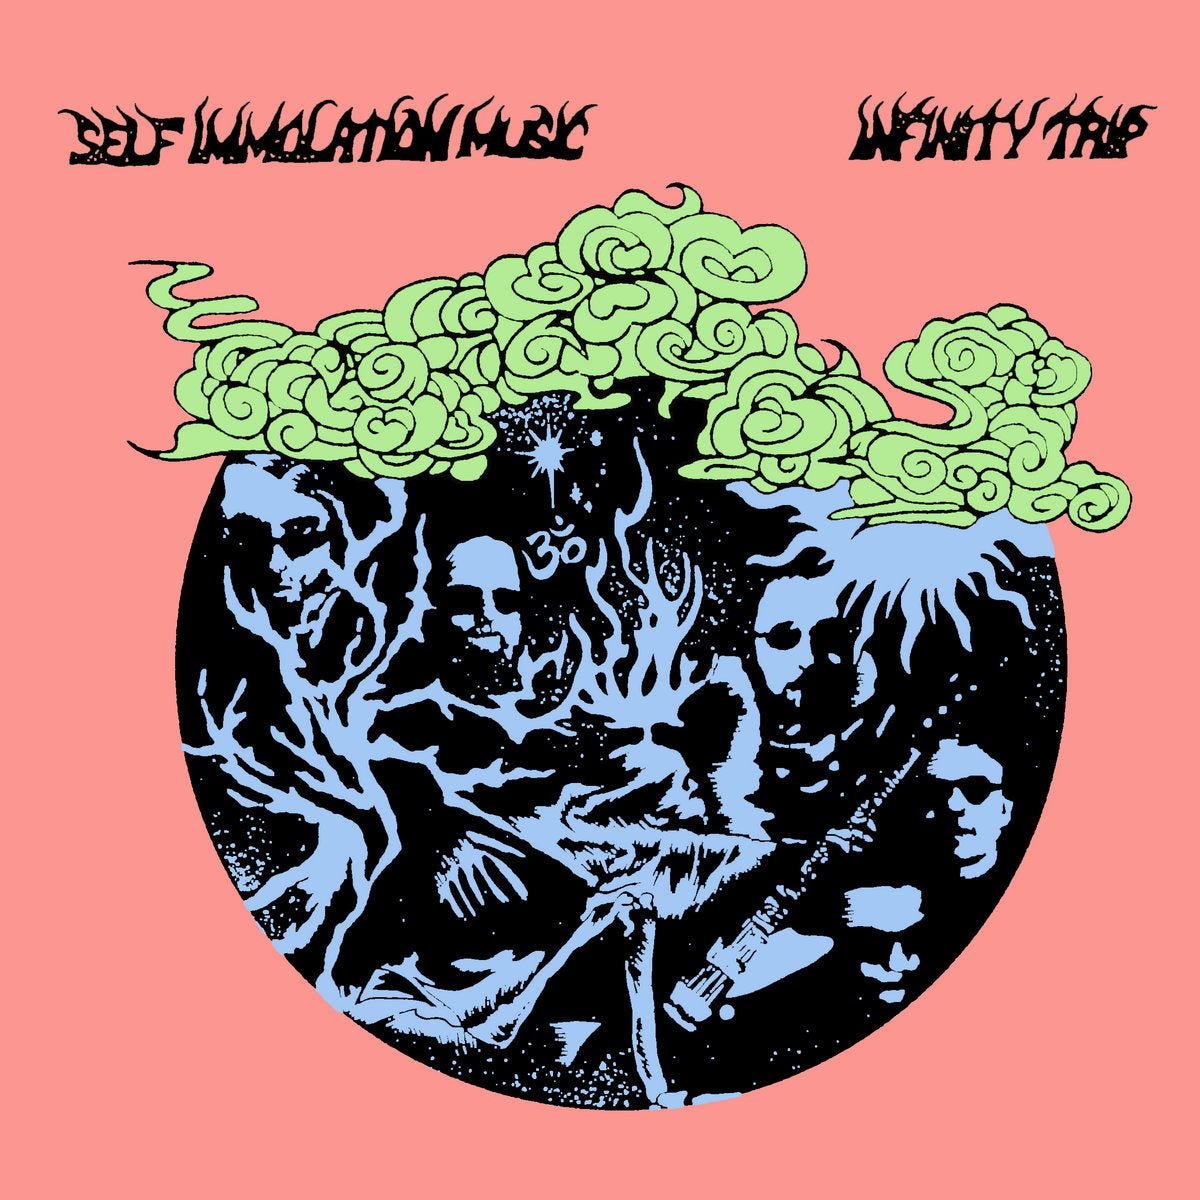 Self Immolation Music - Infinity Trip LP - Vinyl - Delicious Clam